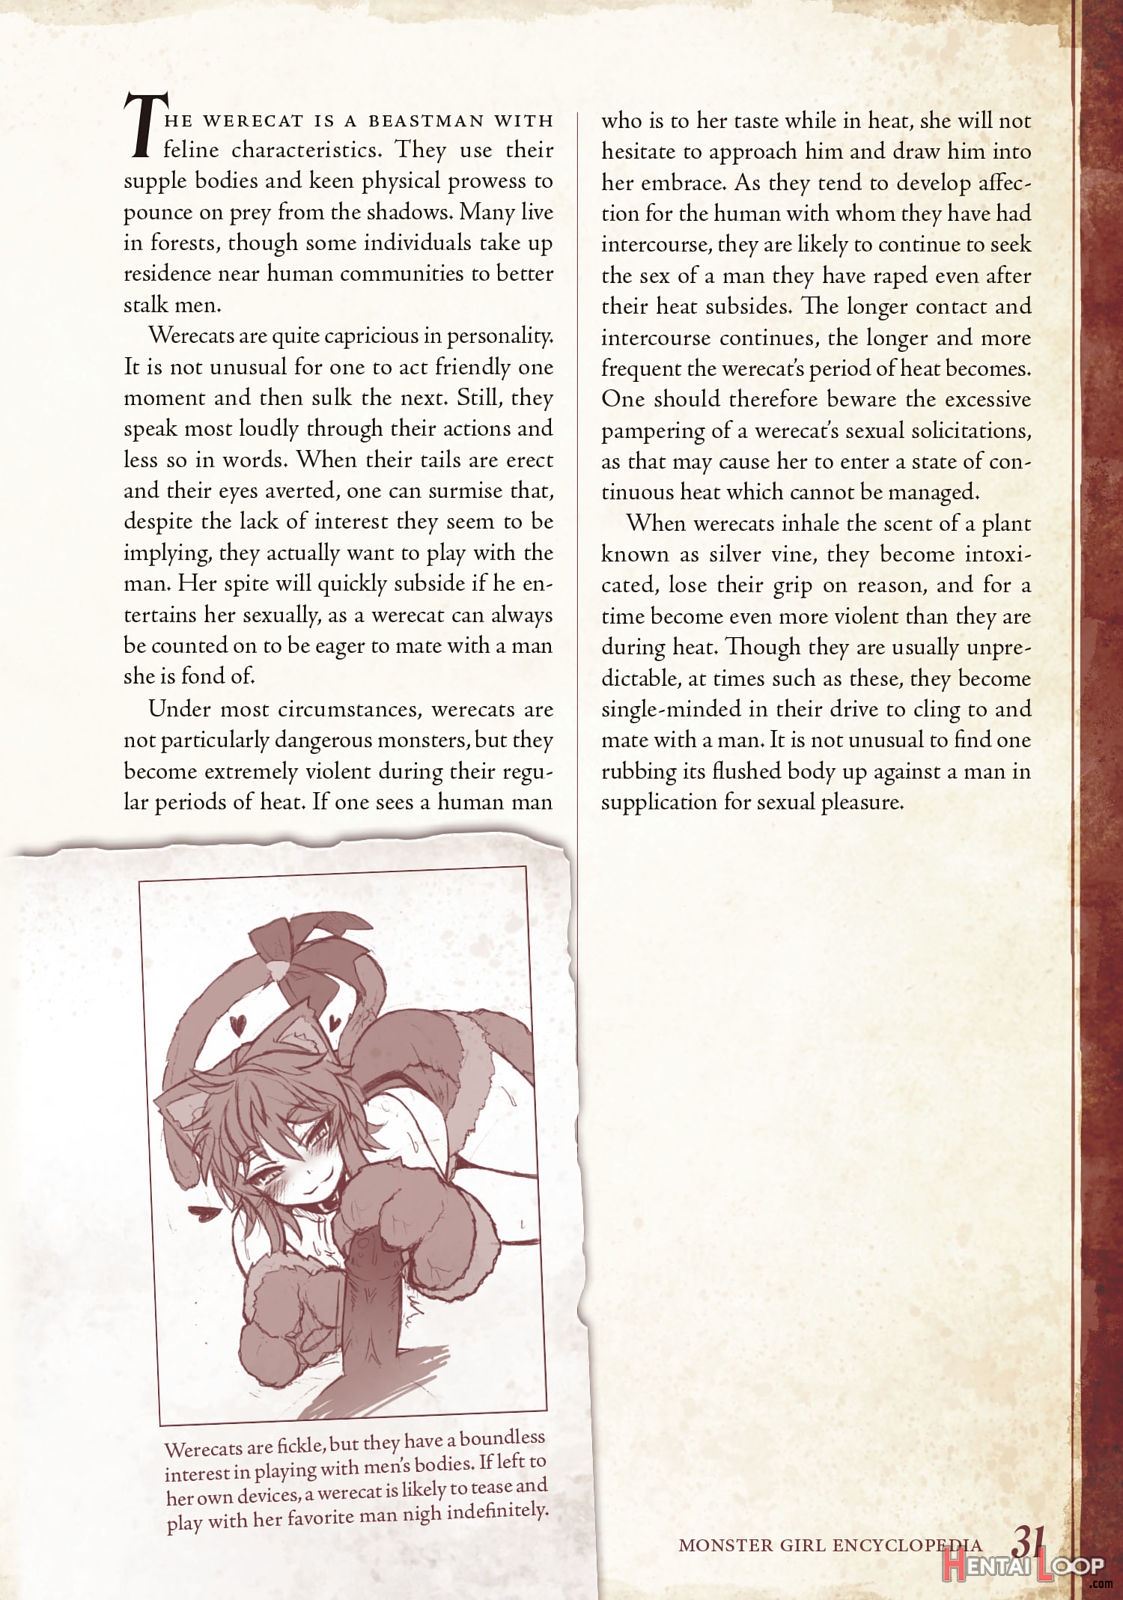 Monster Girl Encyclopedia Vol. 1 page 32